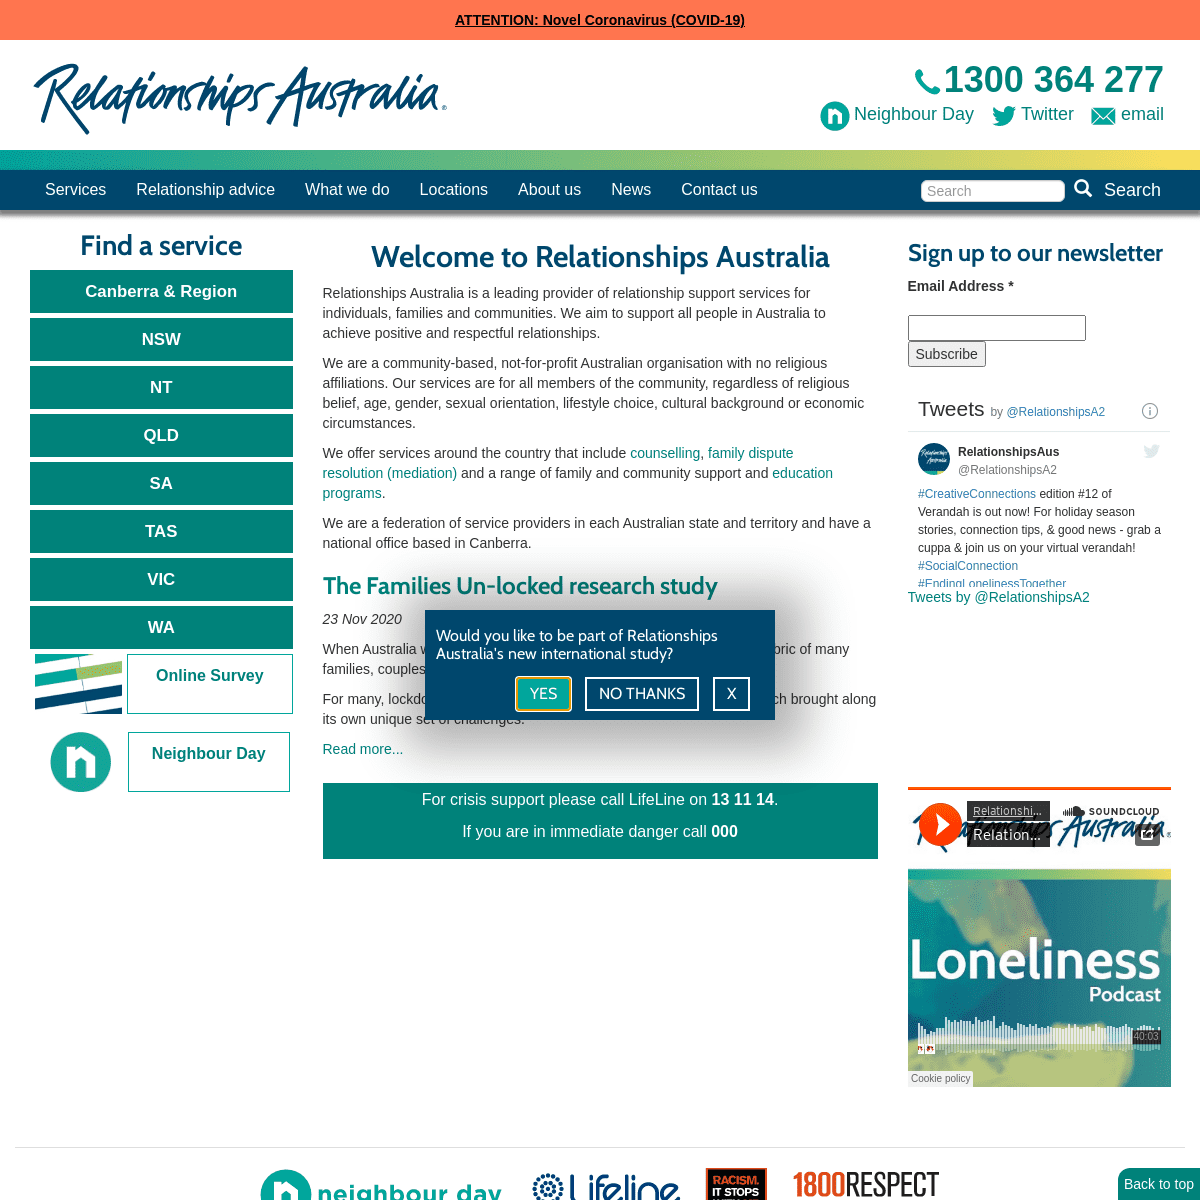 A complete backup of relationships.com.au